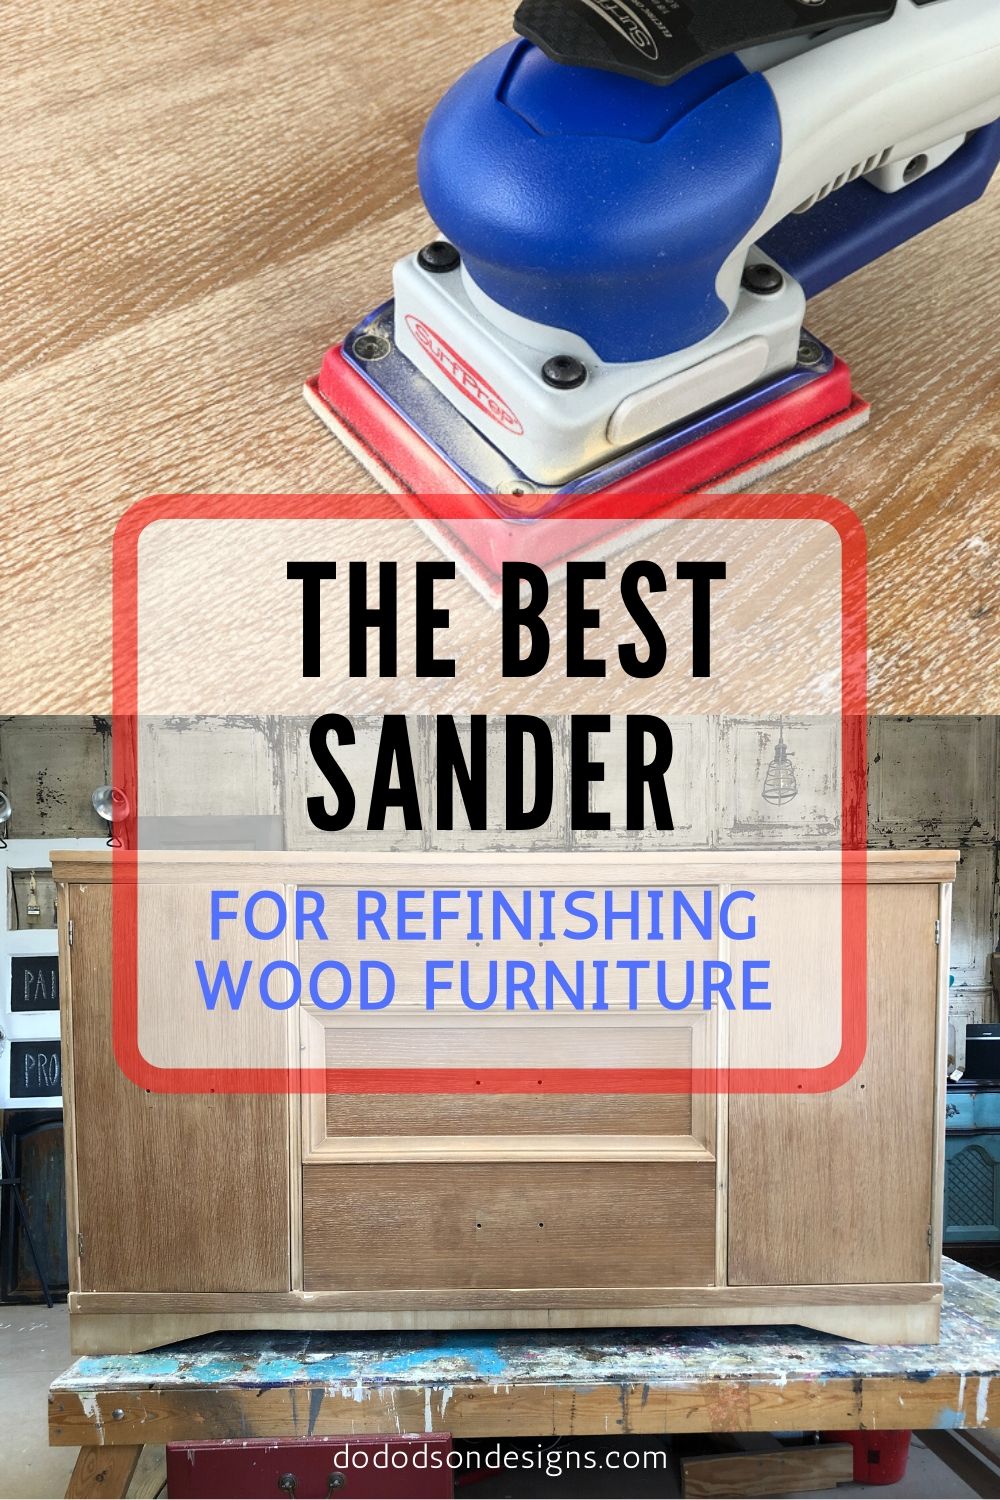 The Best Sander For Refinishing Wood Furniture - Do Dodson Designs